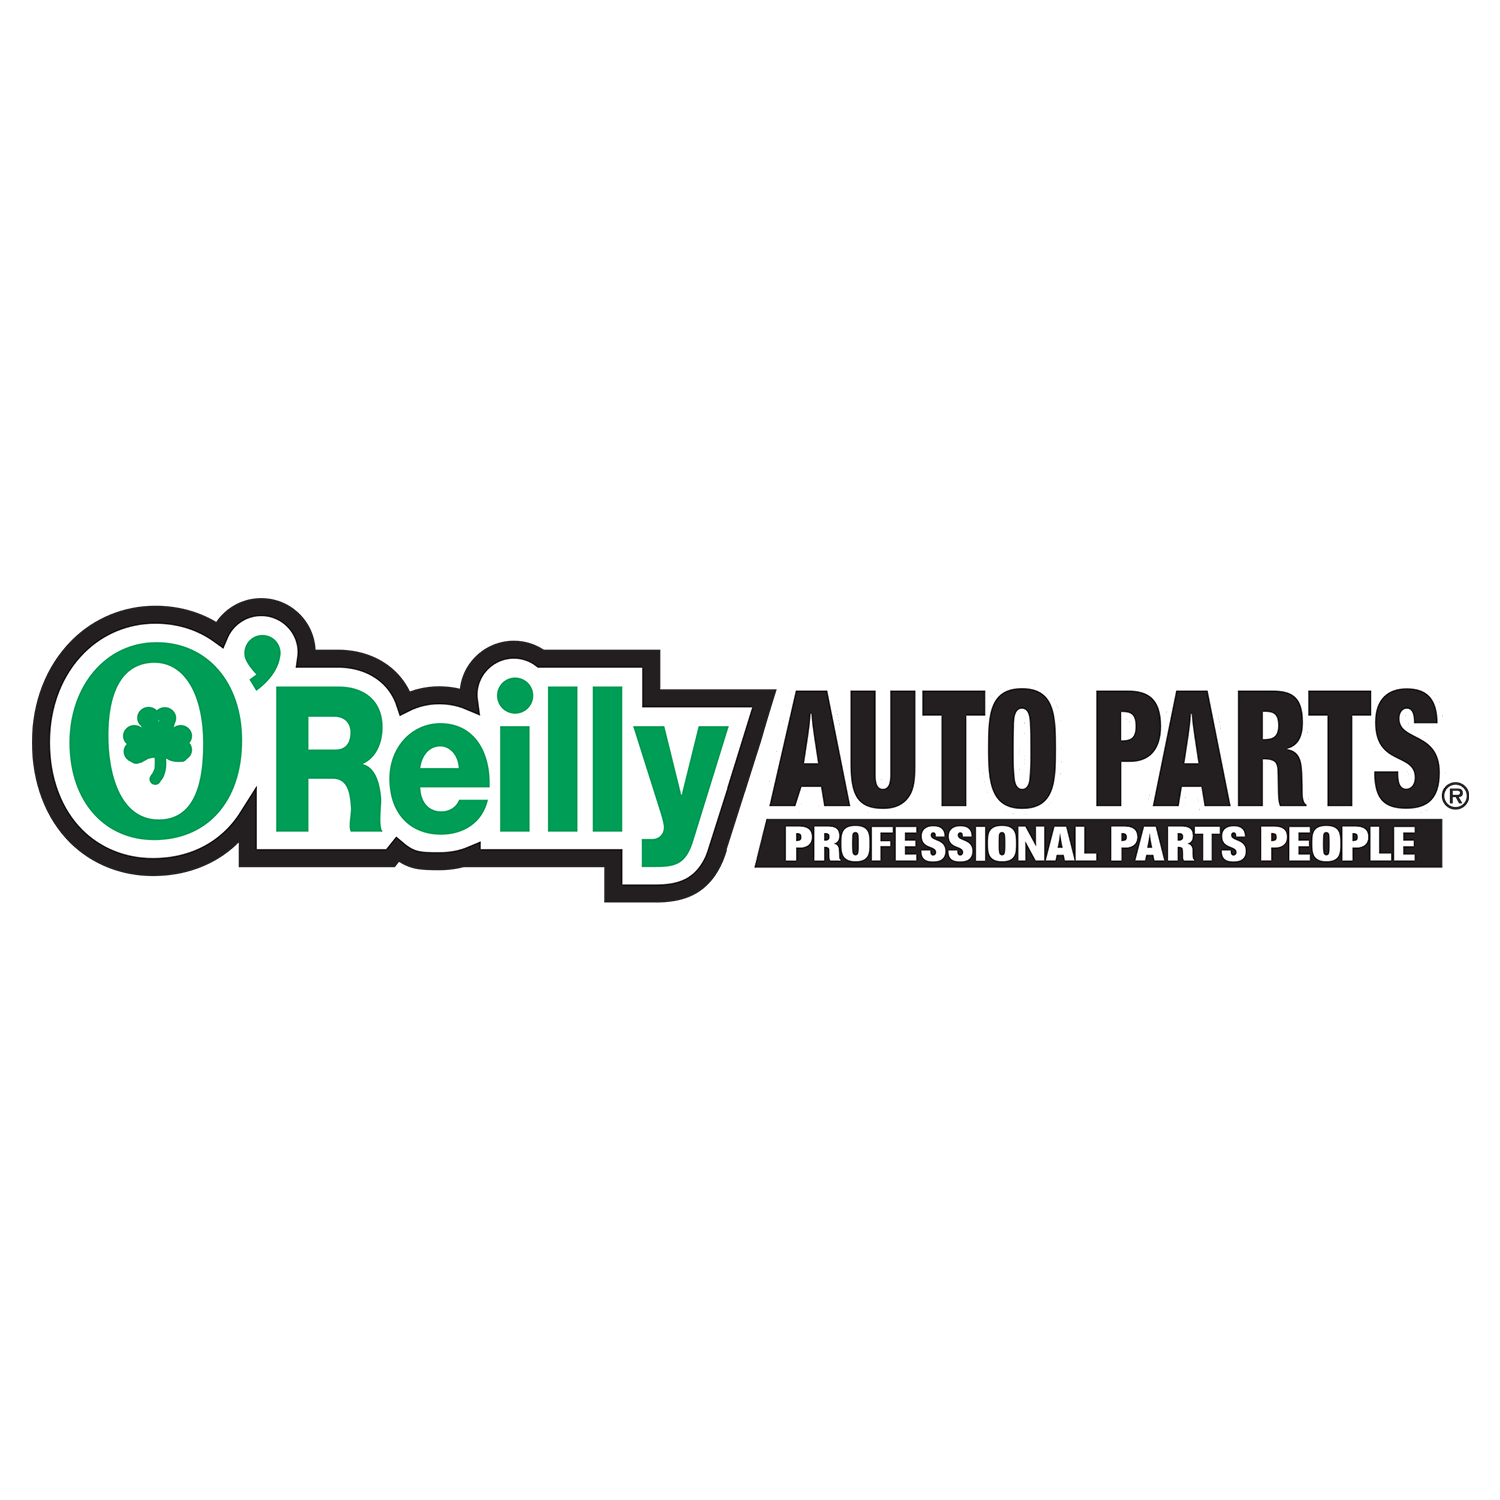 ClientLogos_1500x1500_72-dpi_OReilly-Auto-Parts